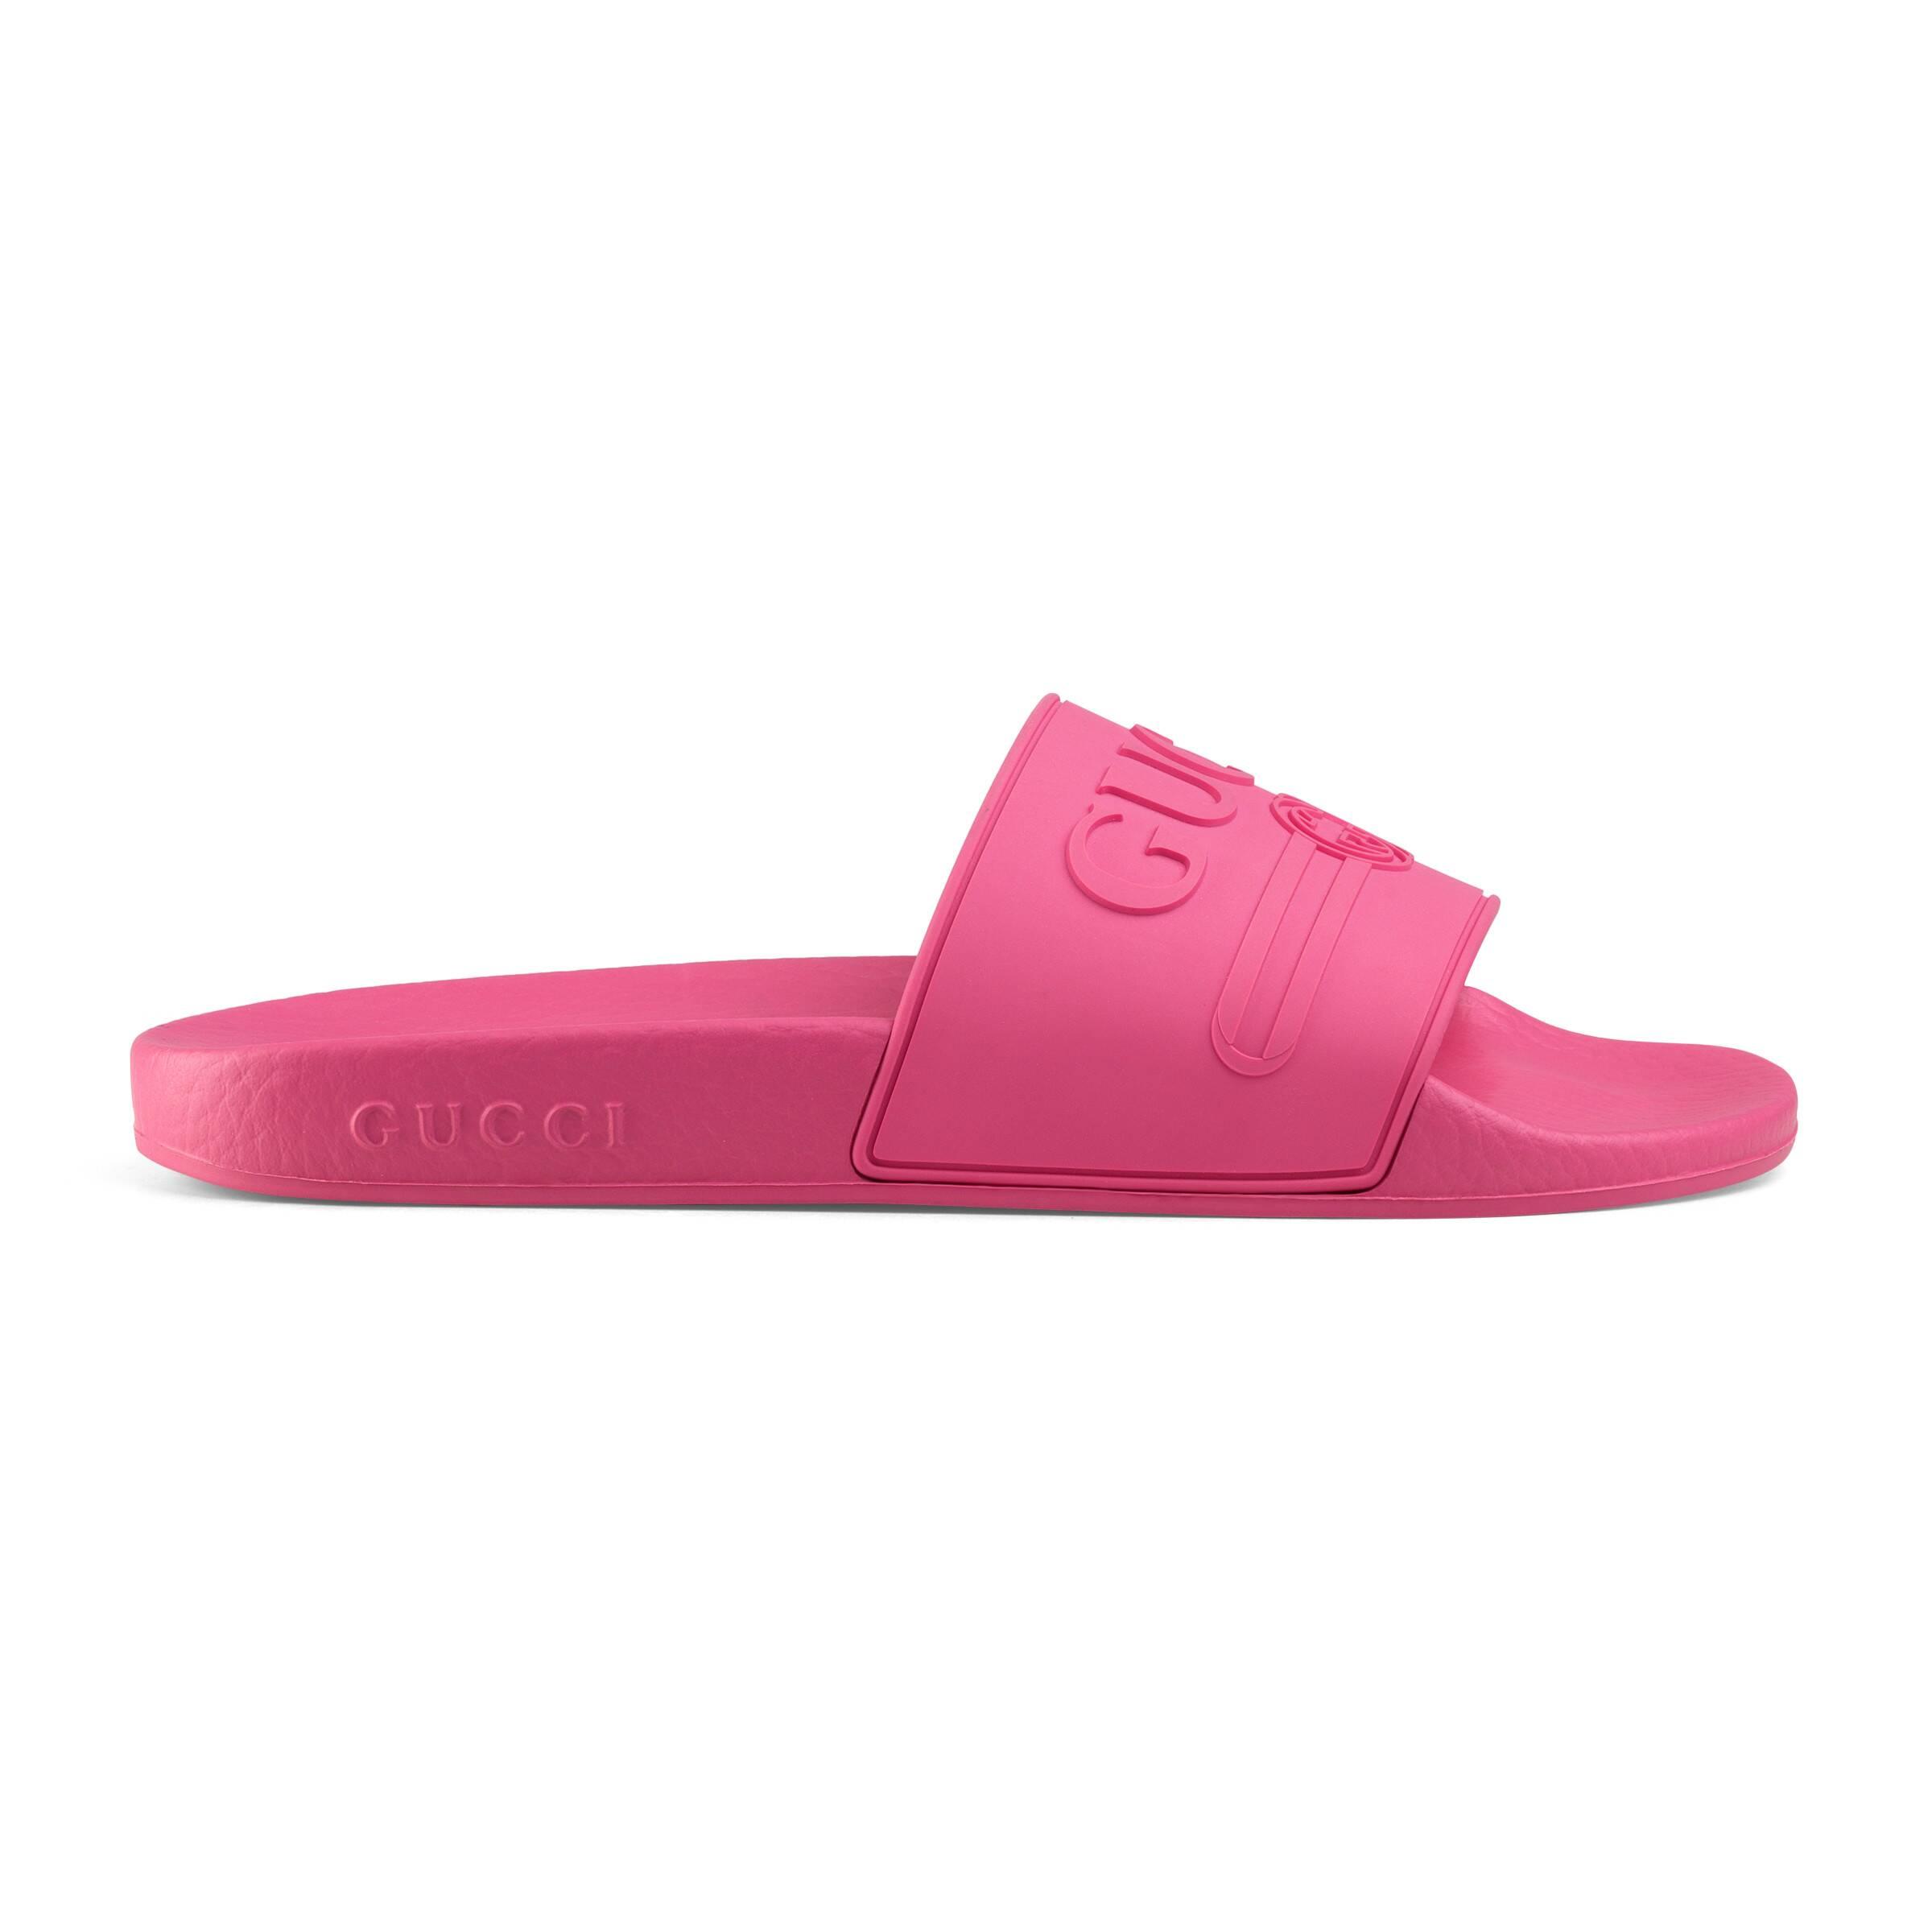 gucci sandals pink